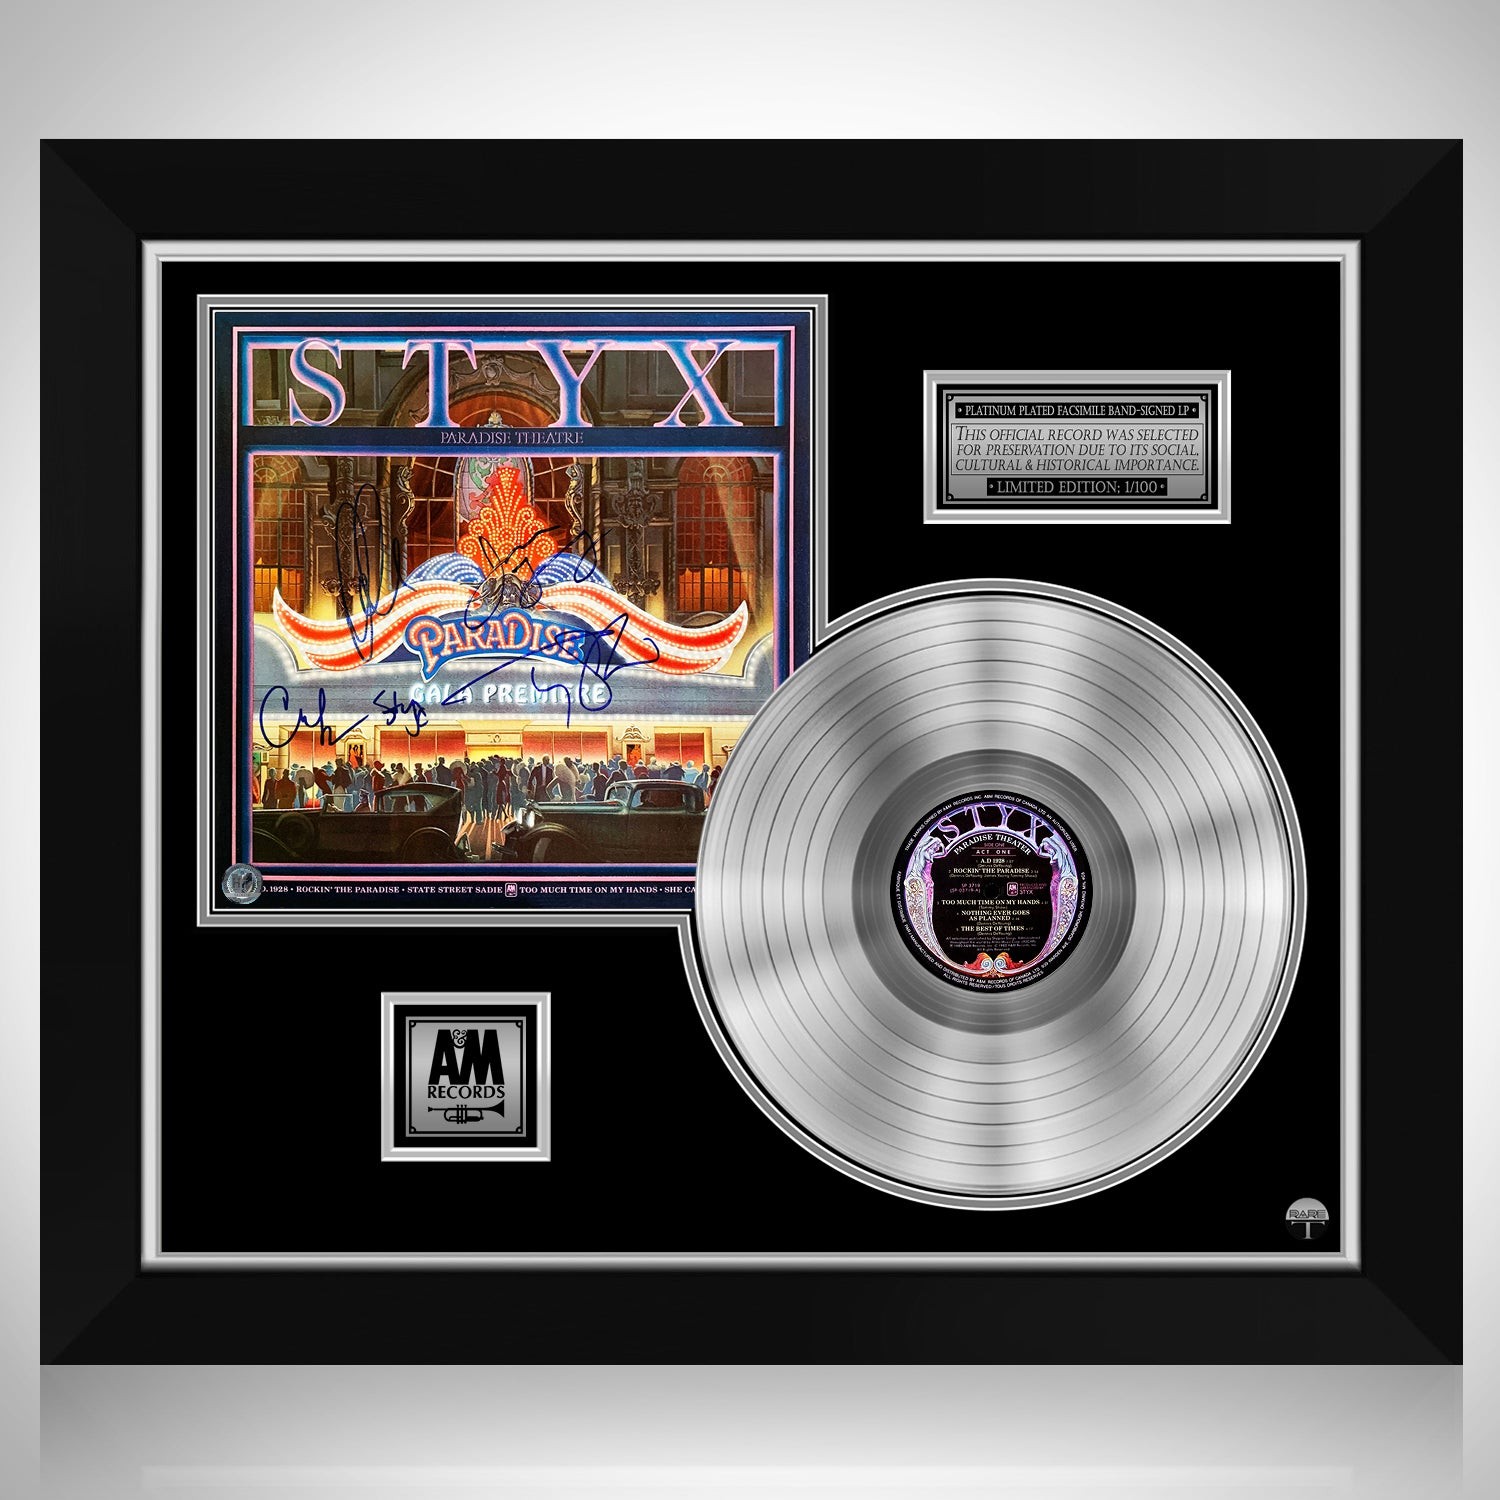 98 Degrees - Revelation Gold LP Limited Signature Edition Custom Frame